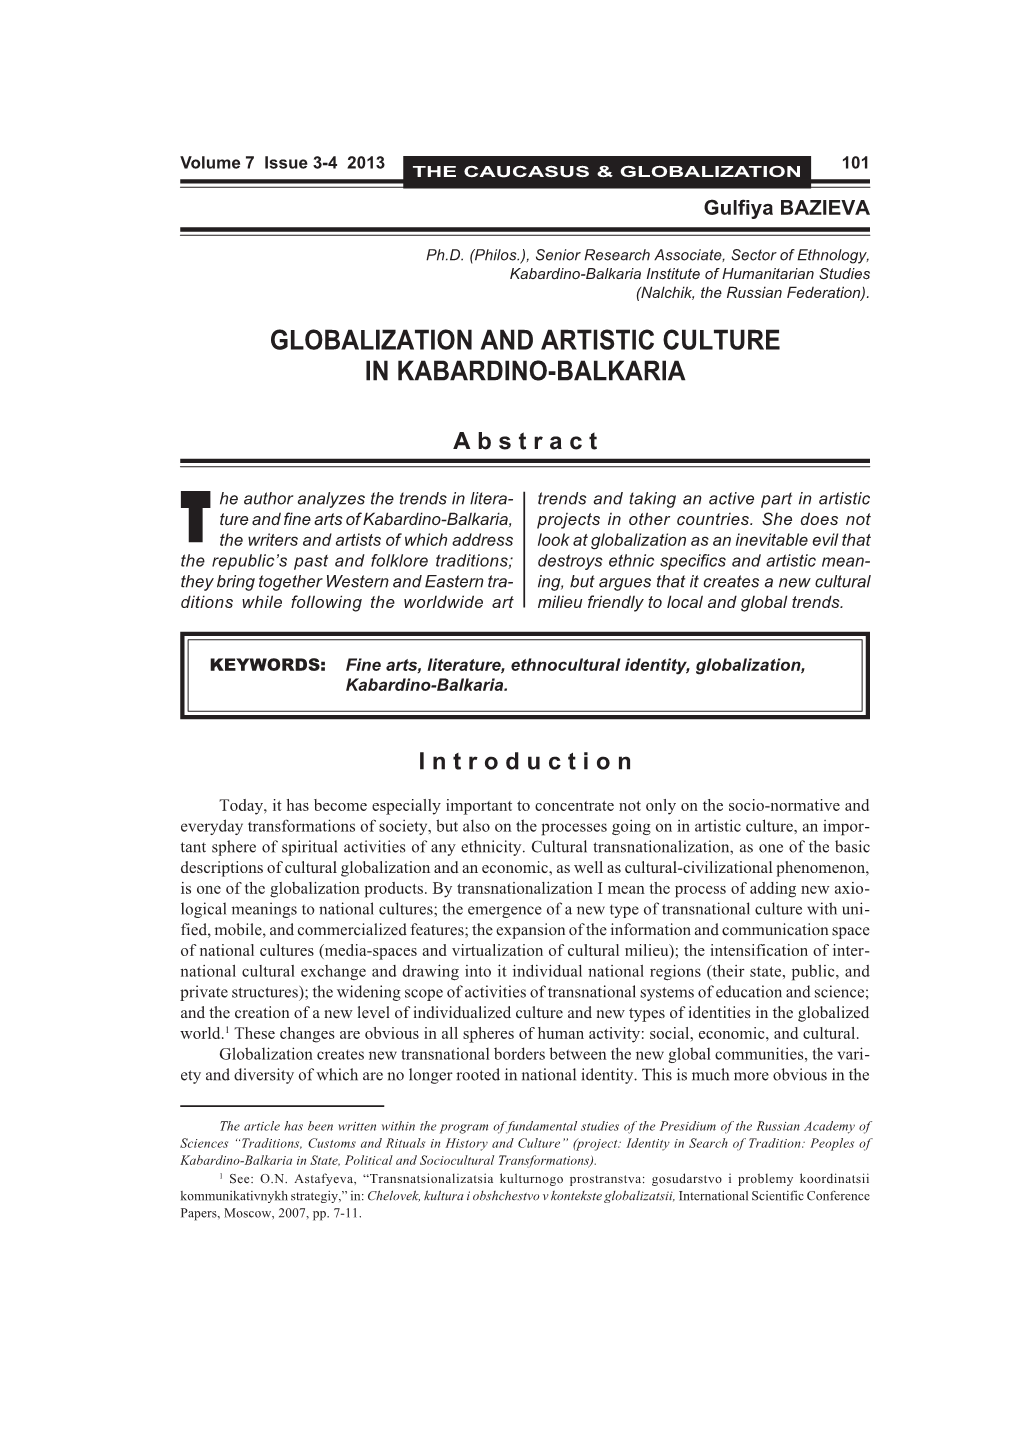 Globalization and Artistic Culture in Kabardino-Balkaria